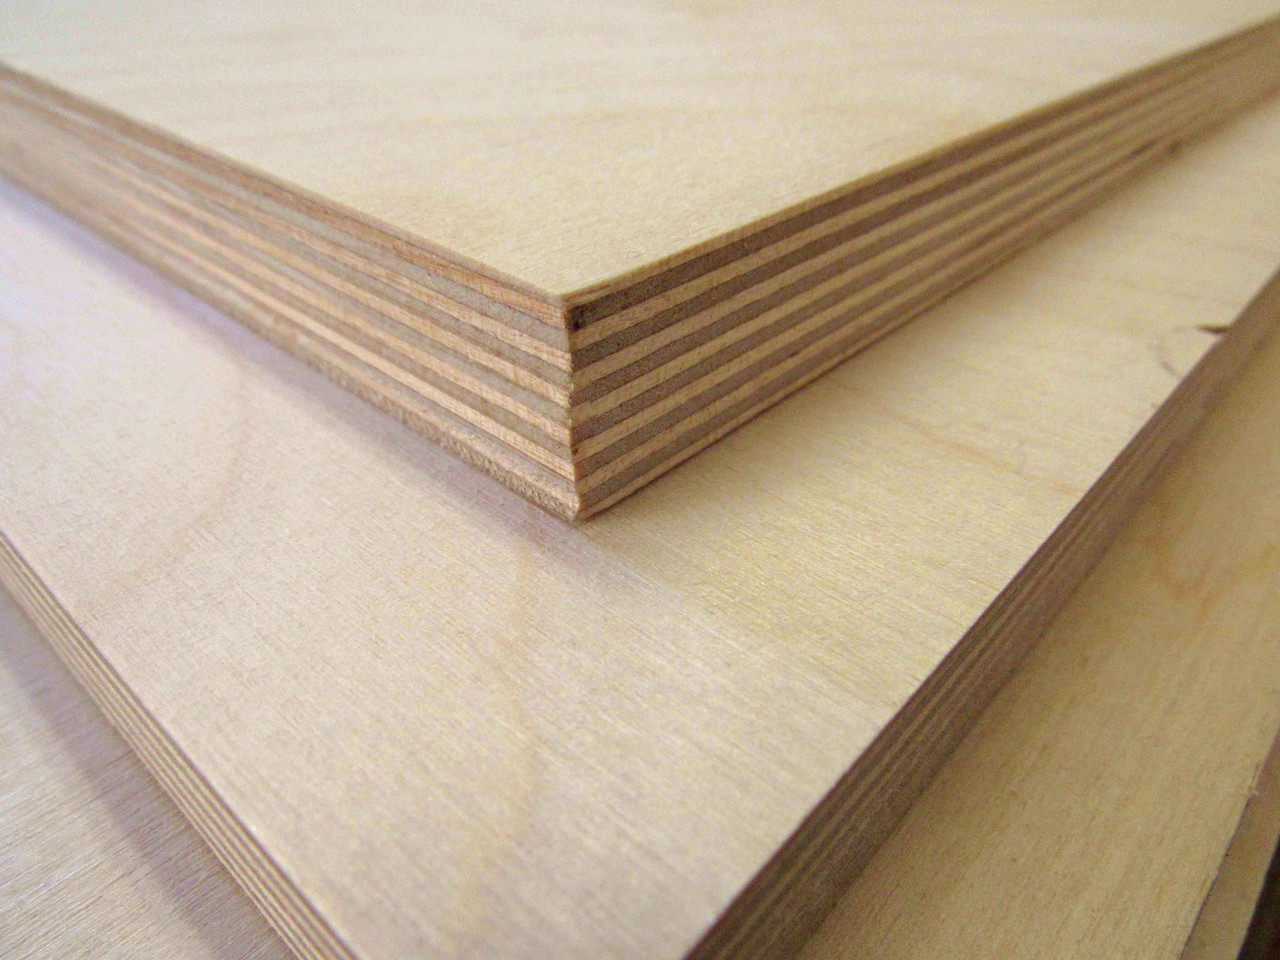 Baltic Birch Marine Grade Plywood Full Sheets 48x96